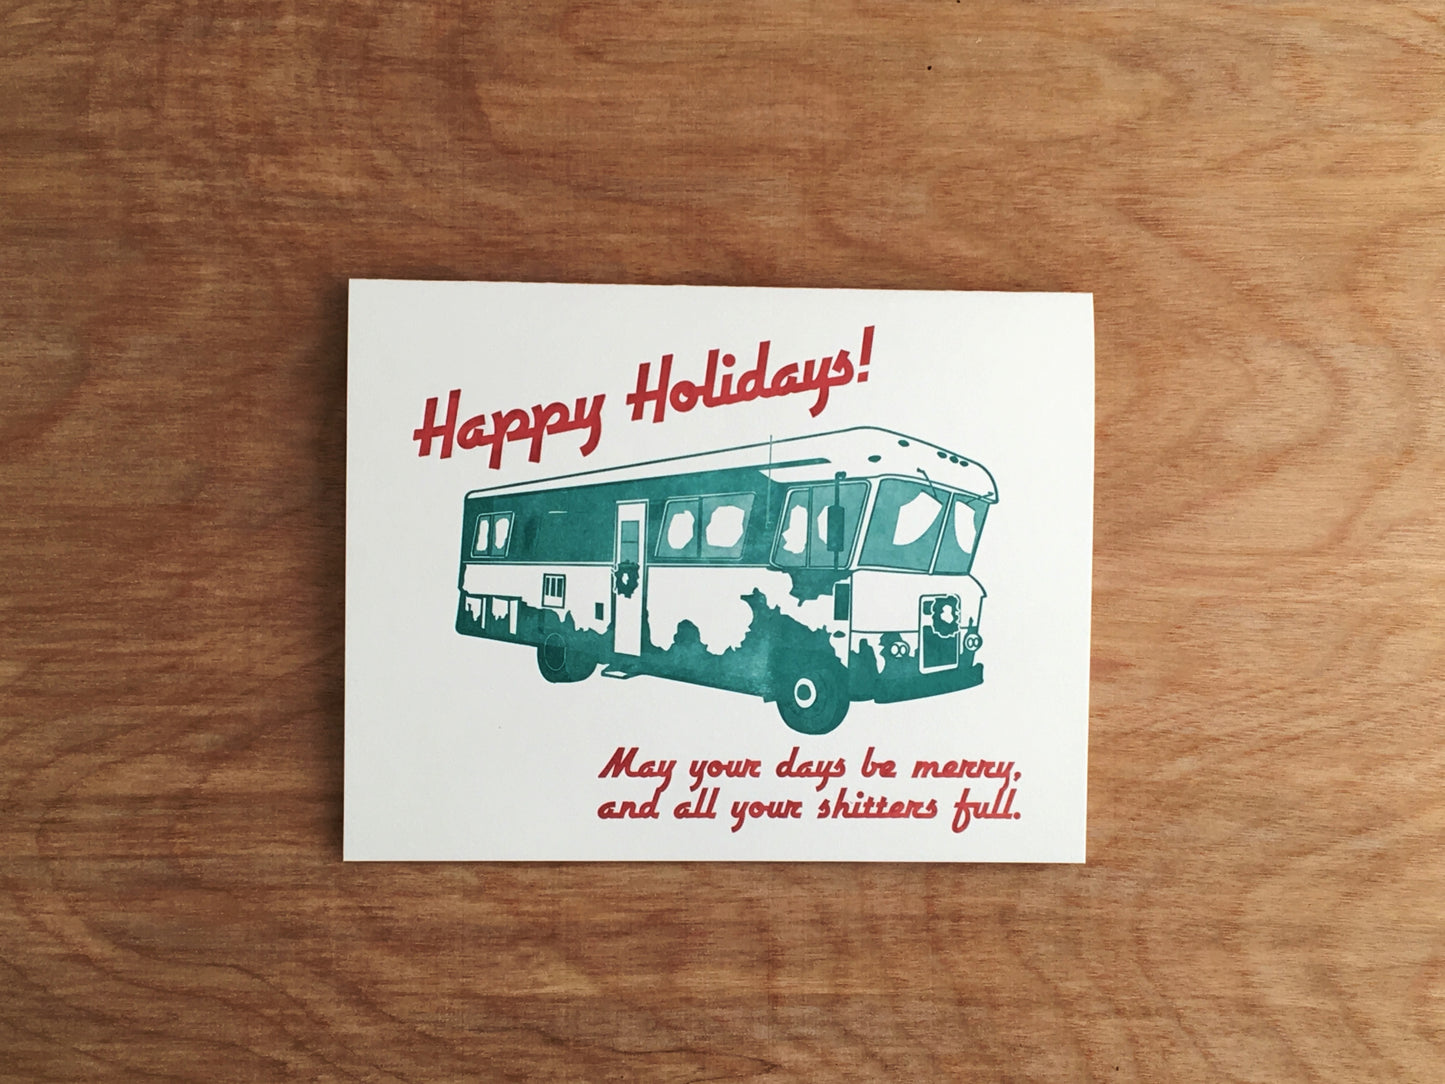 Shitters Full! Holiday Vacation Letterpress Greeting Card!